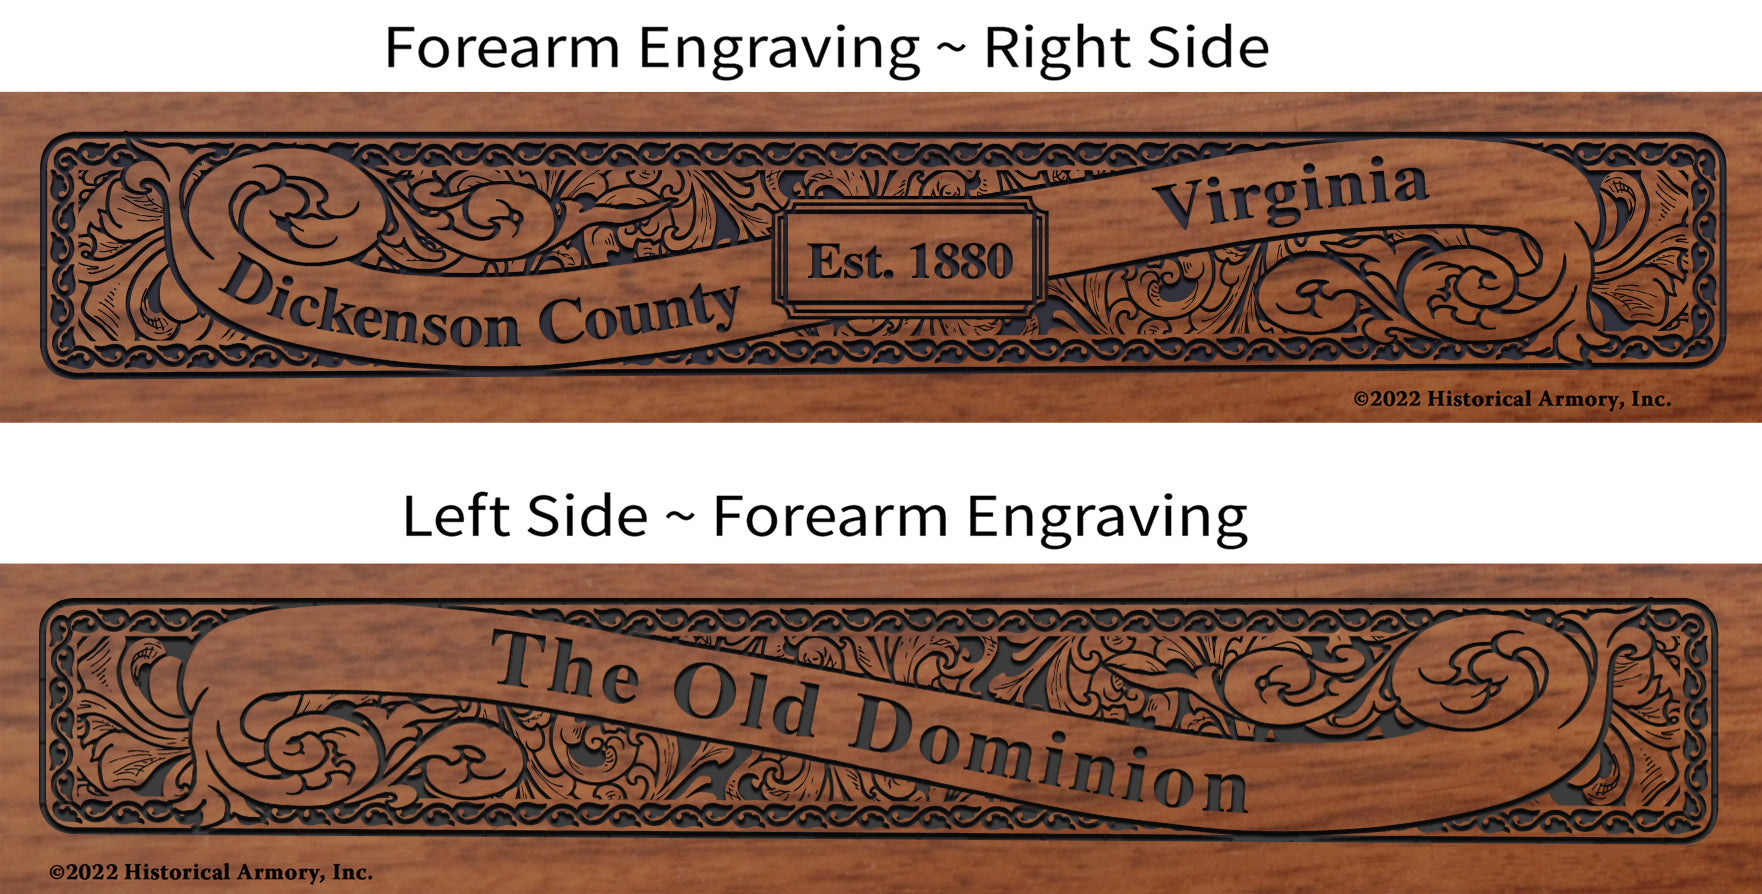 Dickenson County Virginia Engraved Rifle Forearm